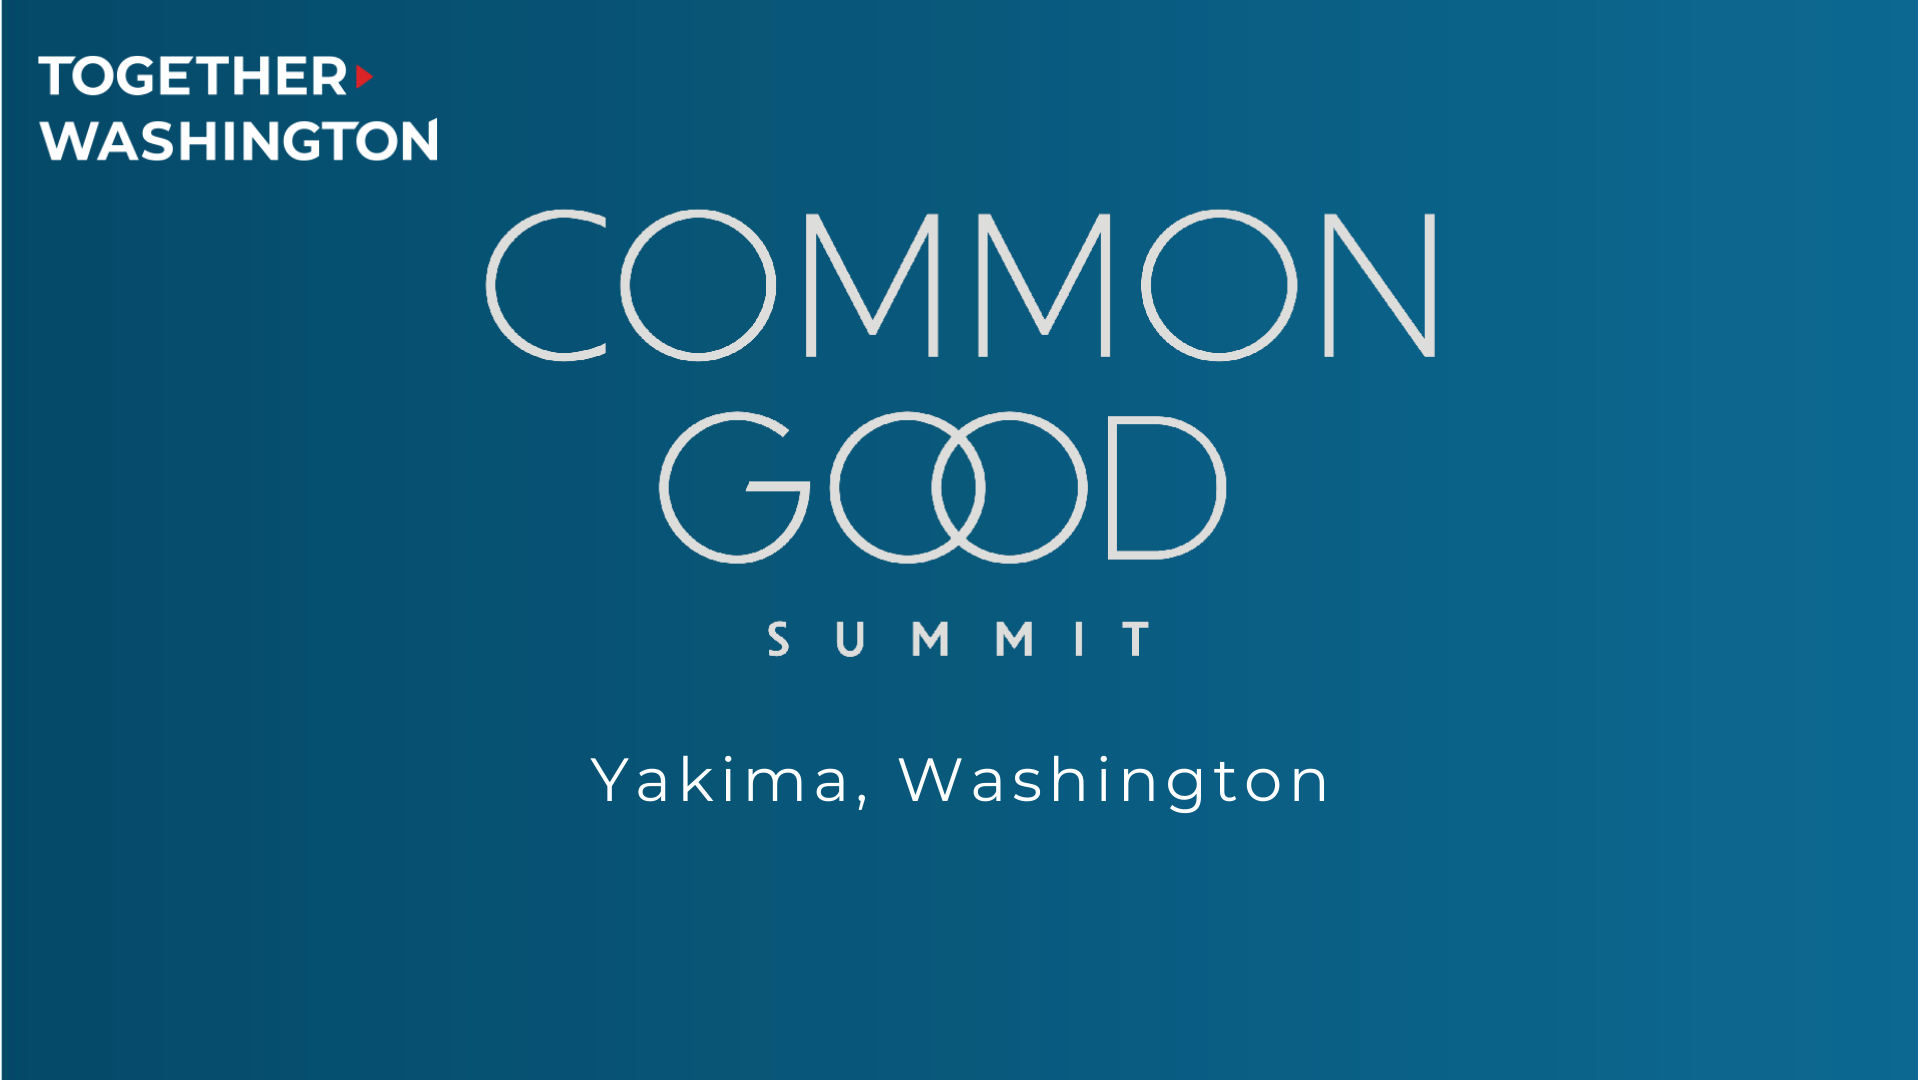 Yakima Summit for the Common Good